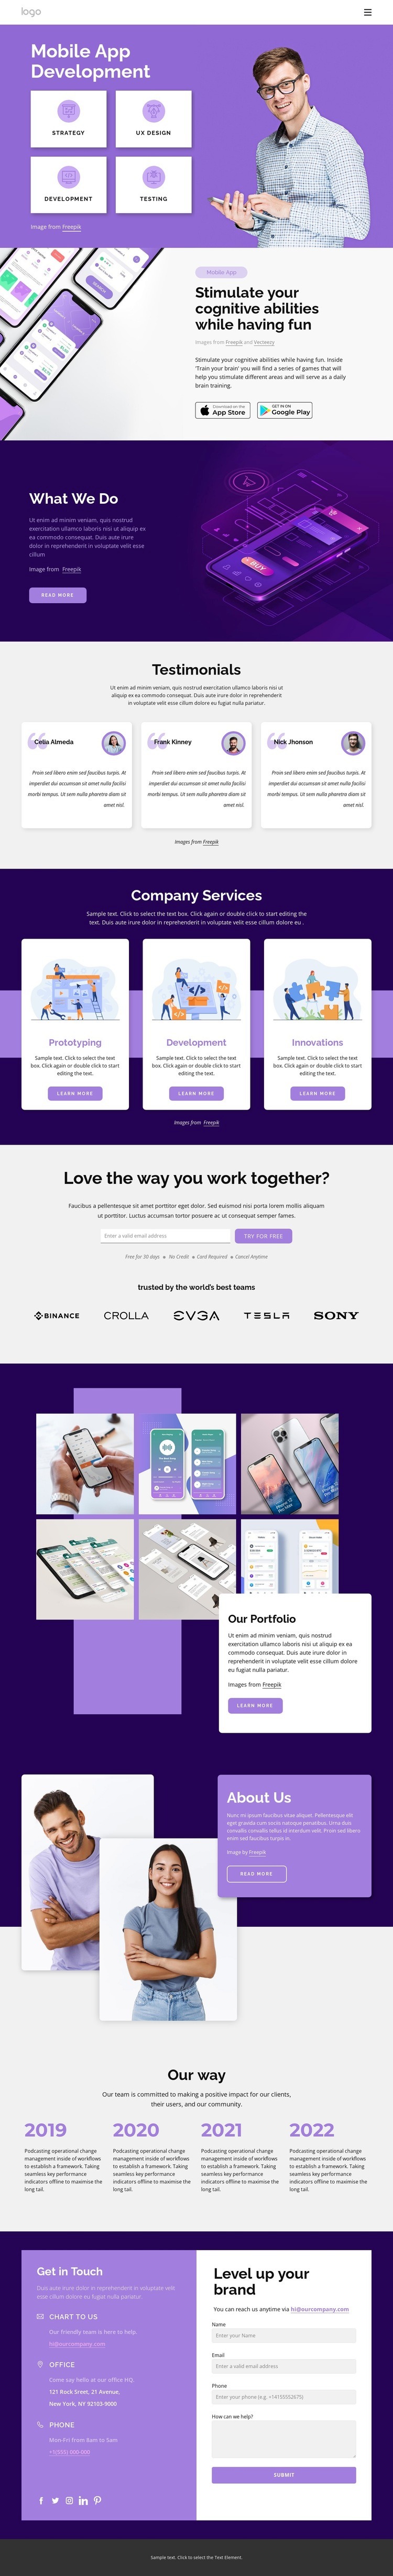 Digital firm Homepage Design